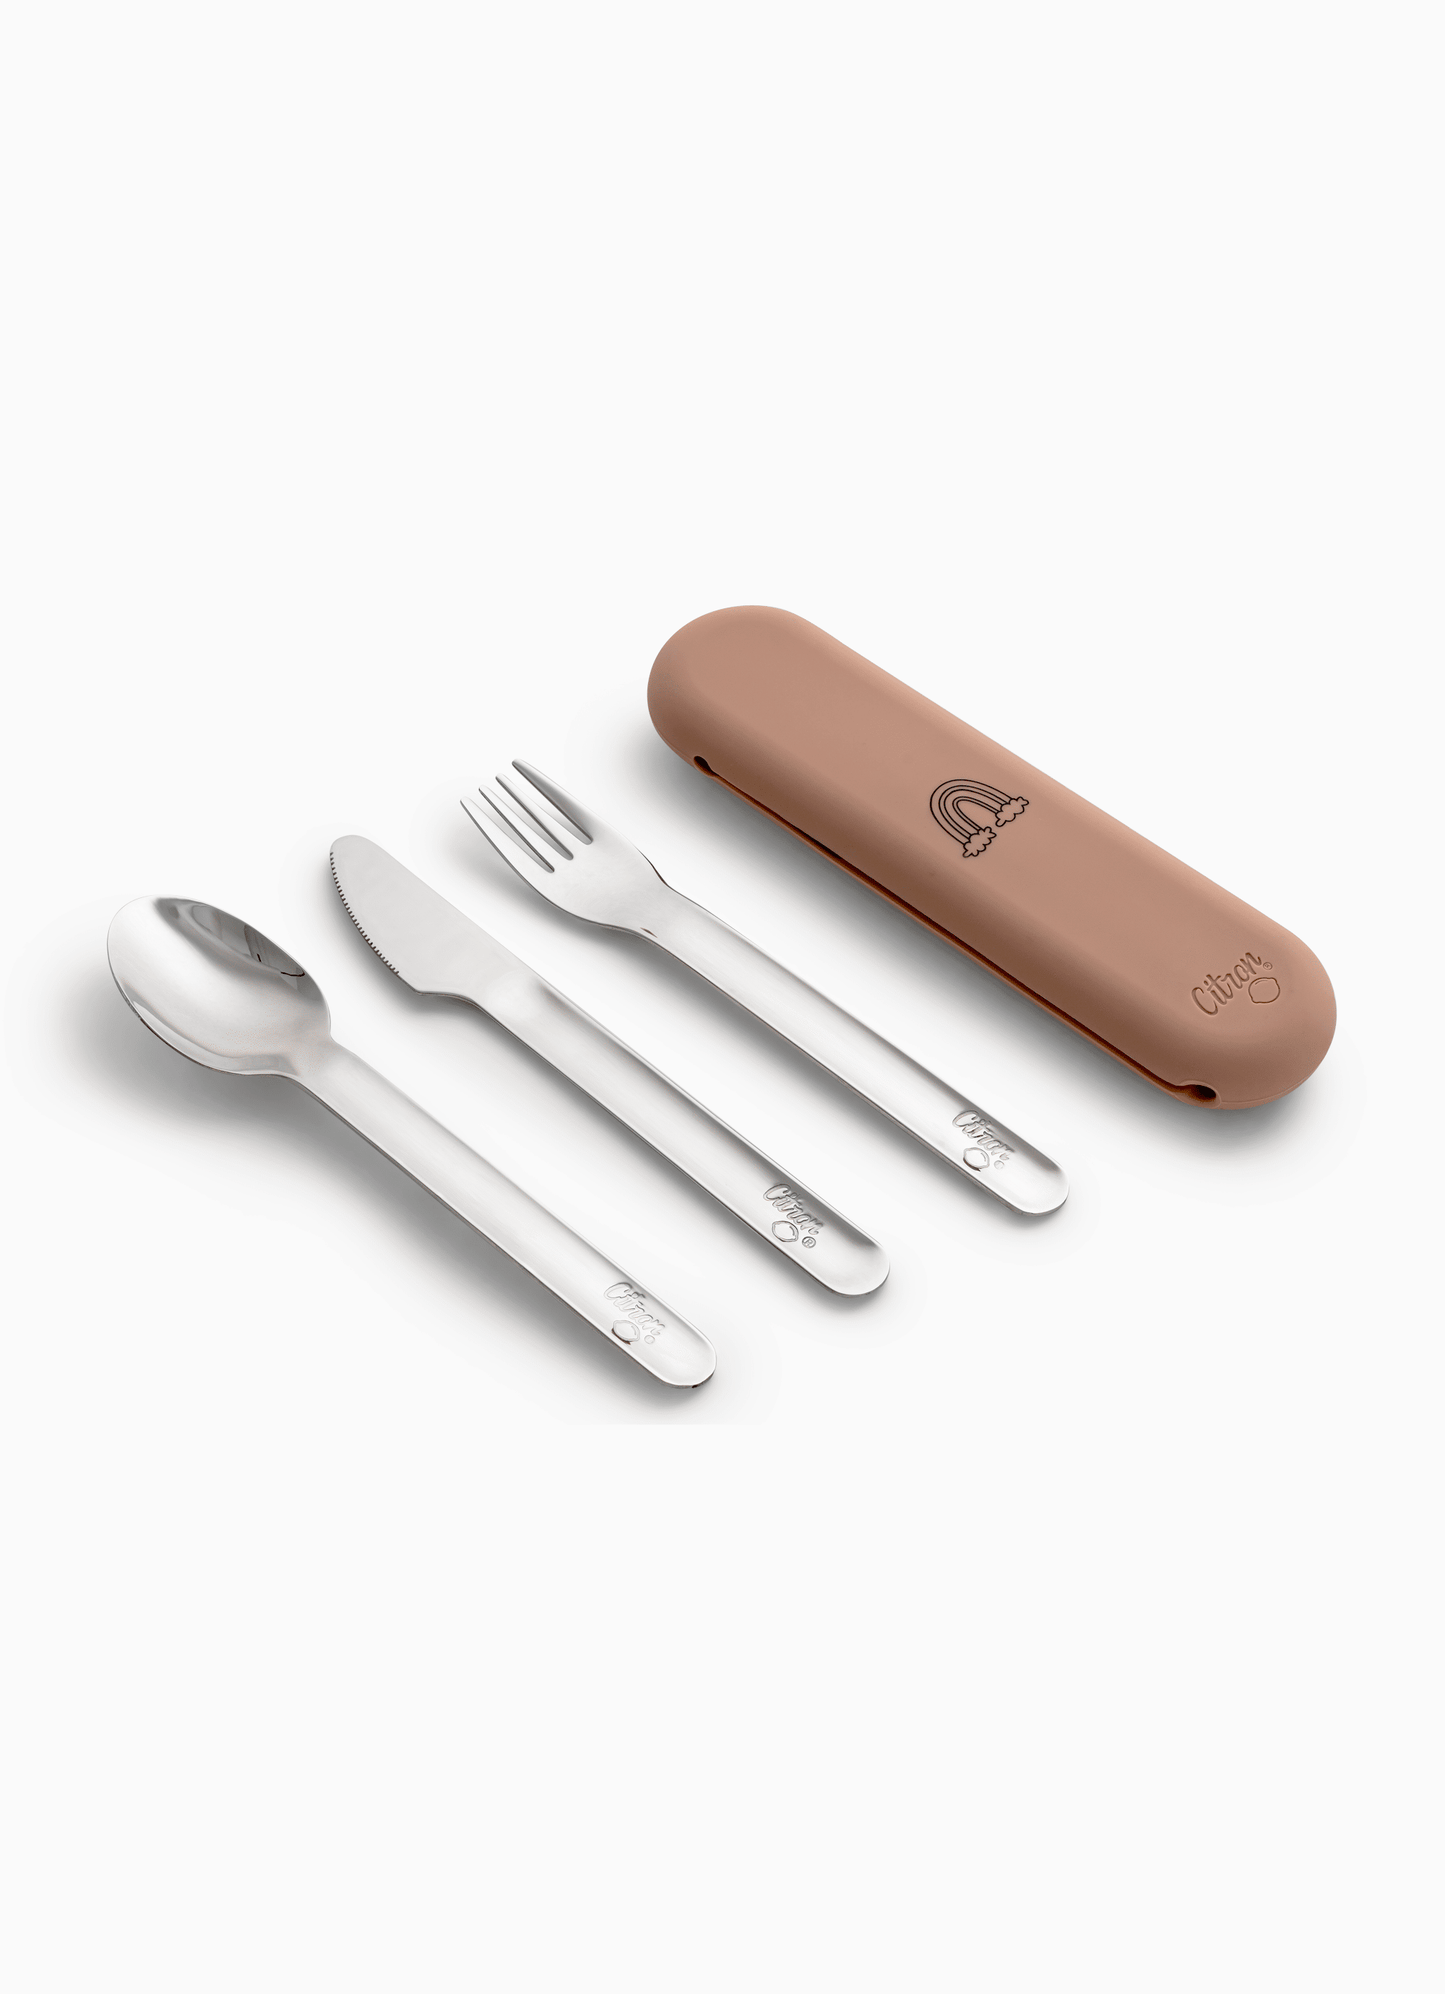 Stainless Steel Cutlery Set - Unicorn Blush Pink + Case